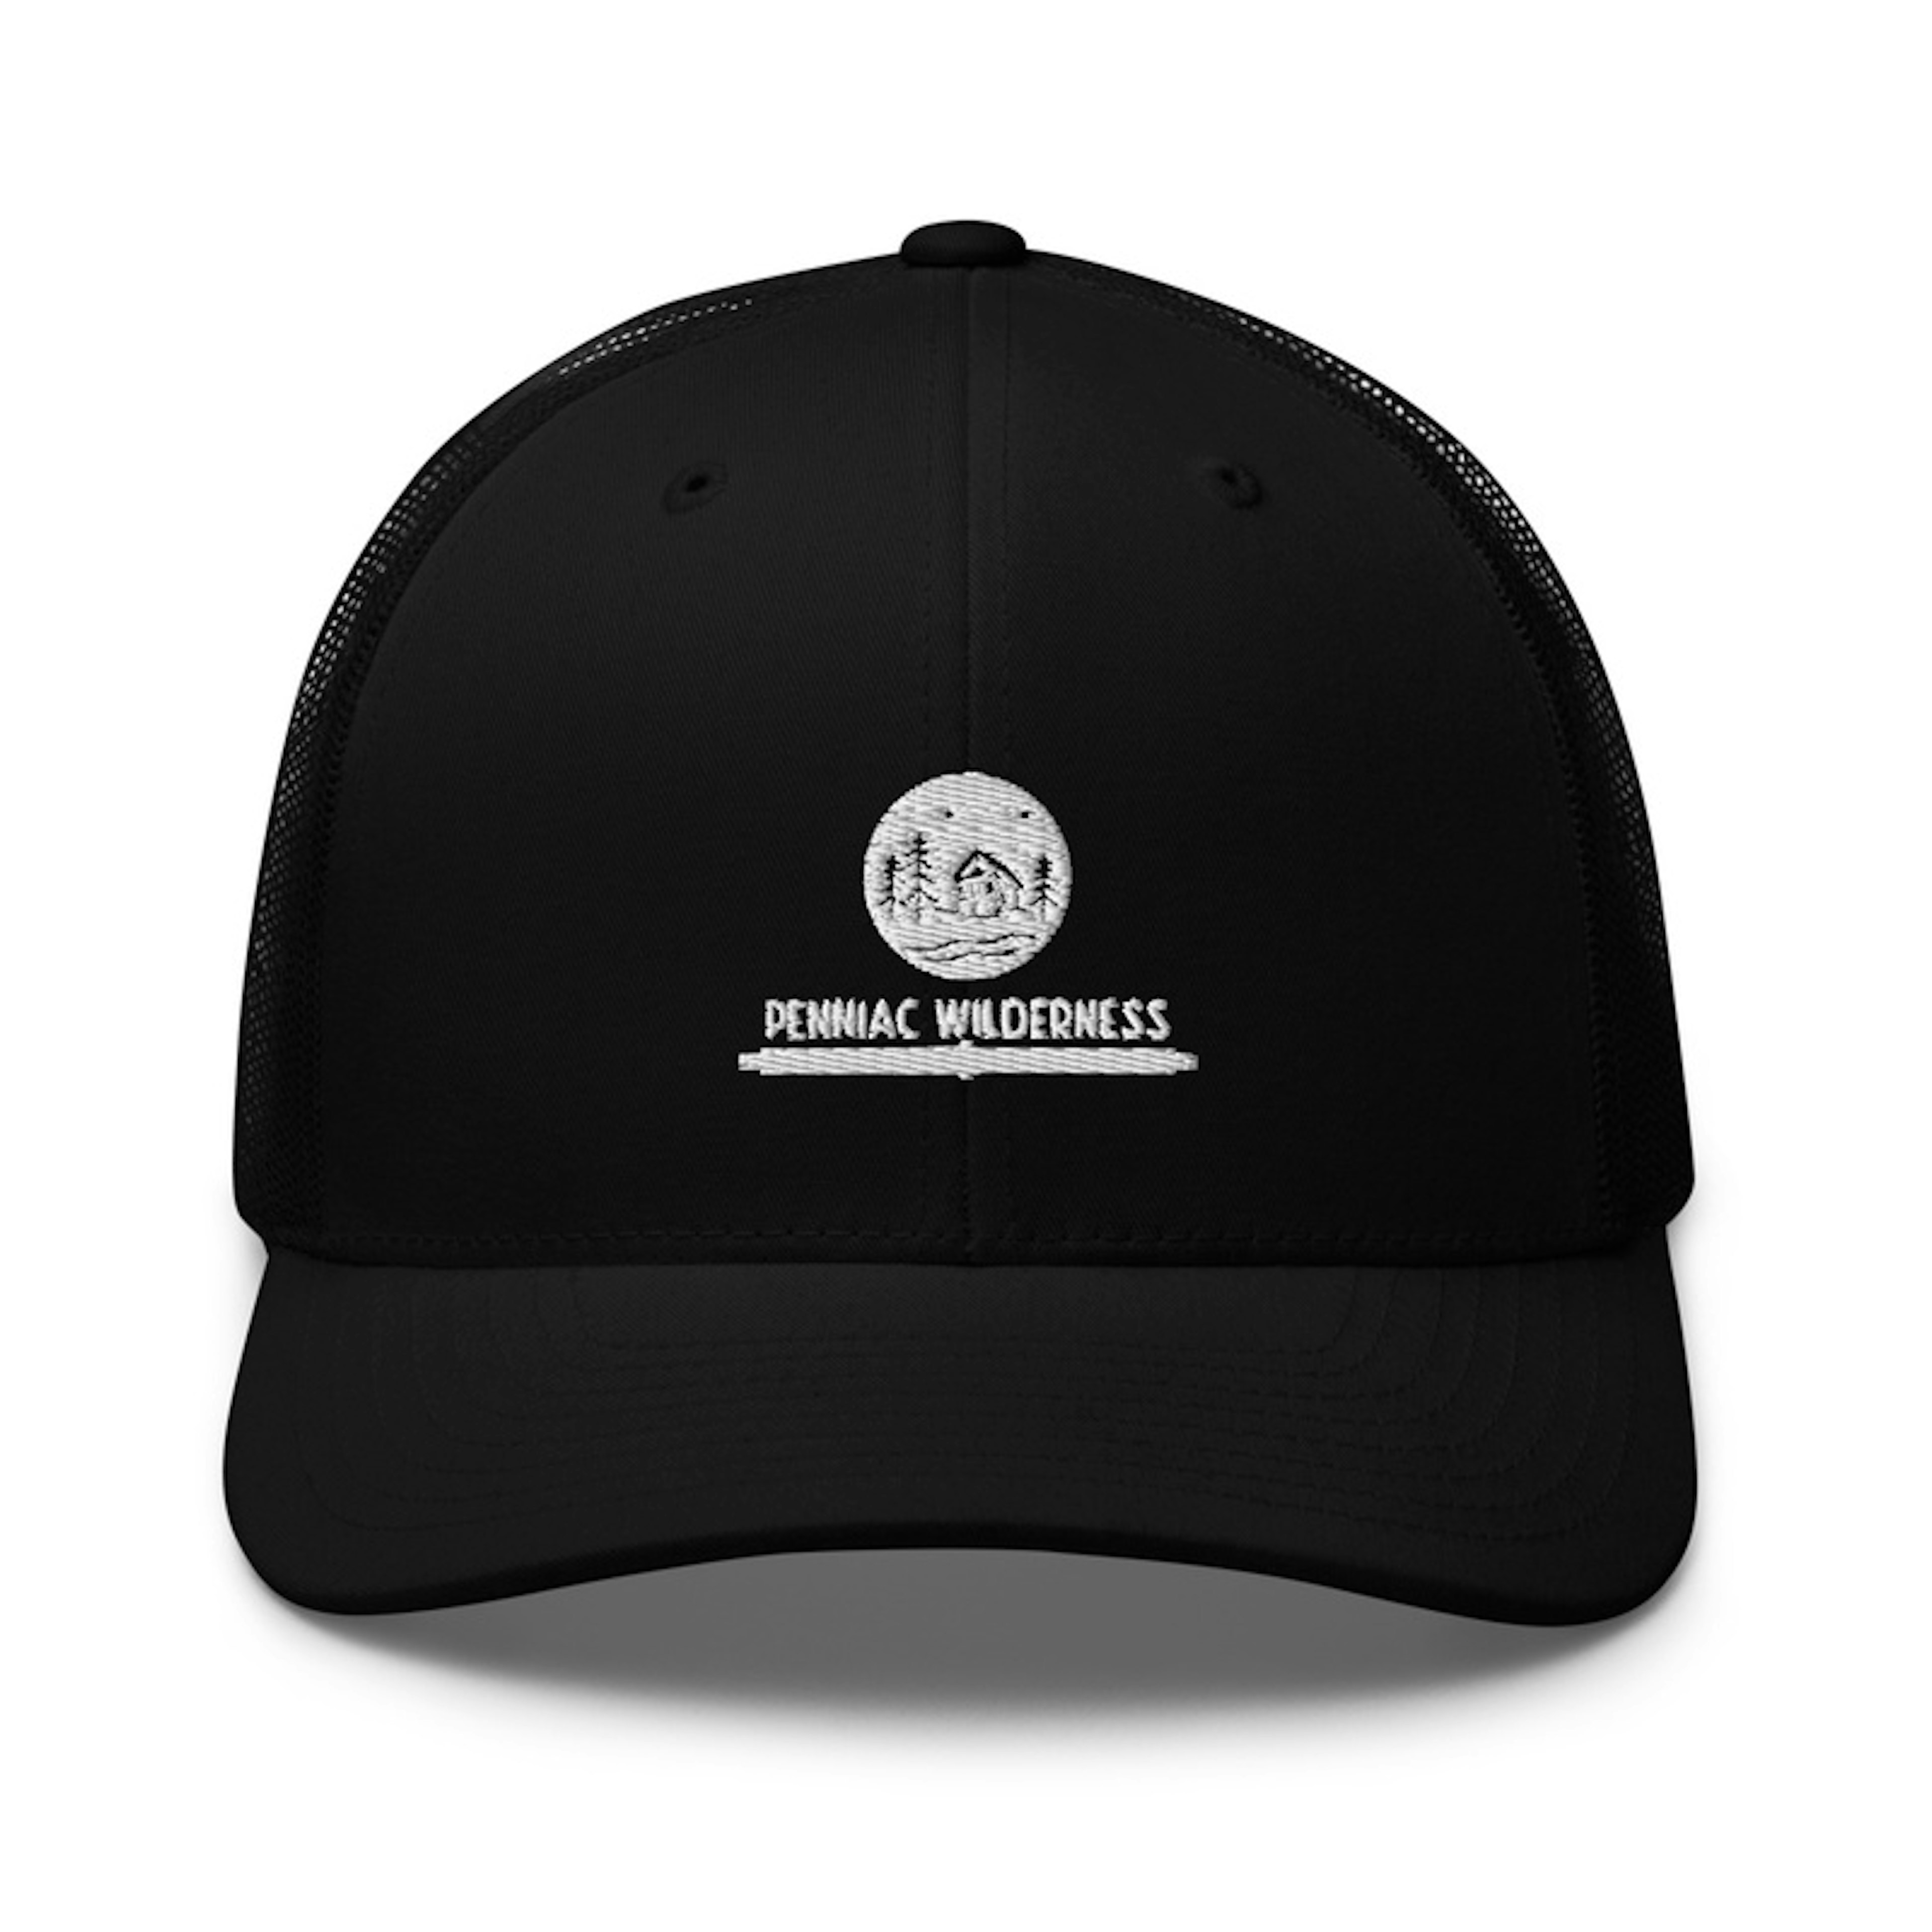 Penniac Wilderness Trucker Hat